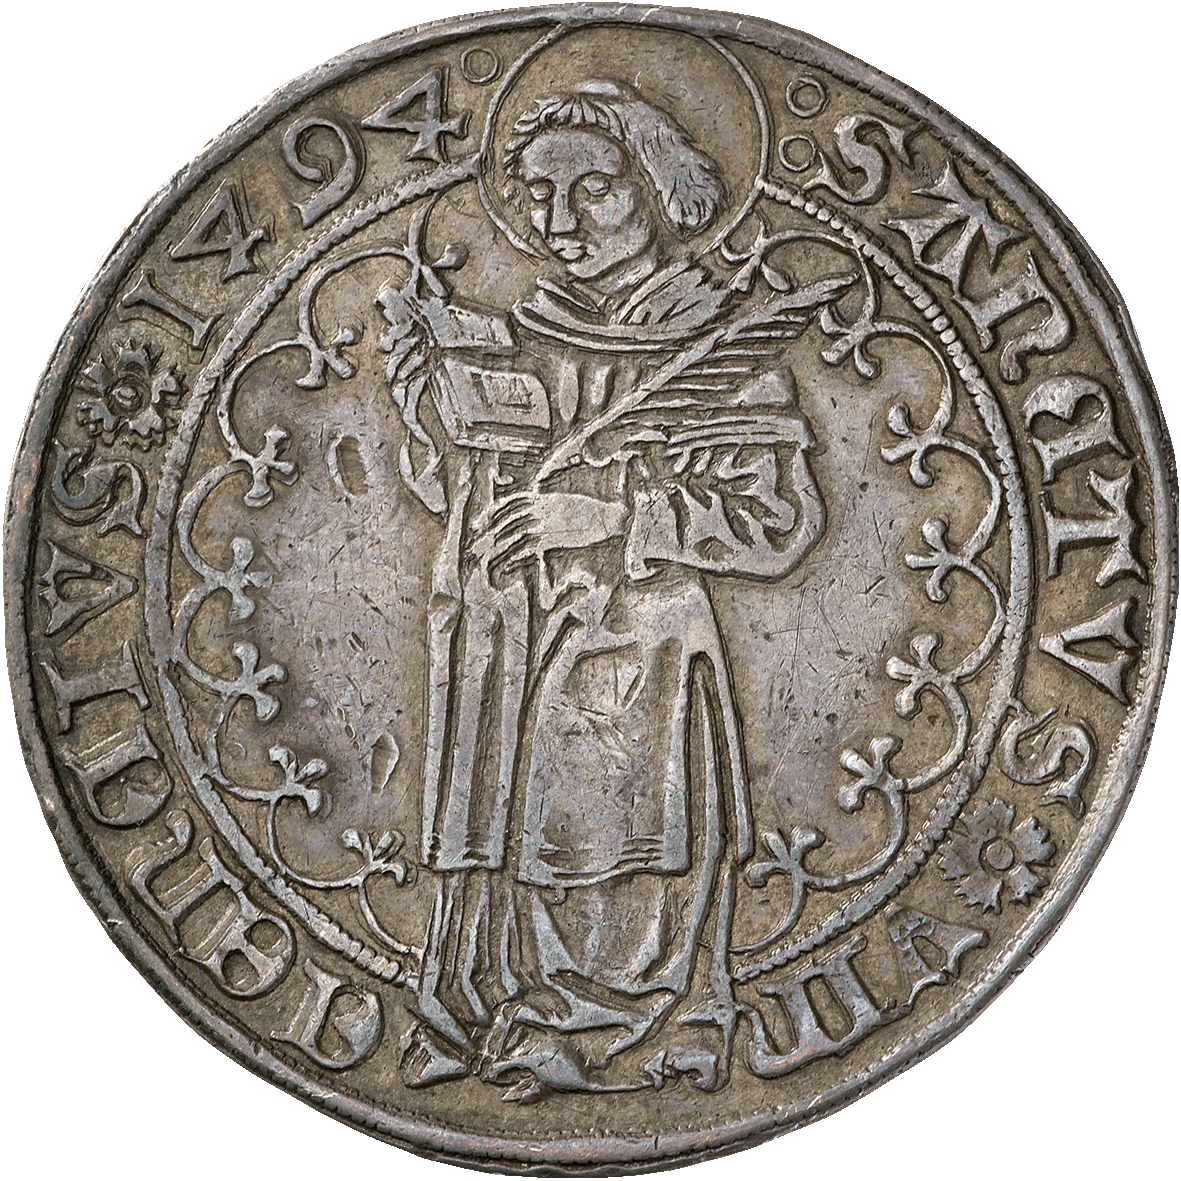 Holy Roman Empire, City of Berne, Guldiner 1494 (reverse)